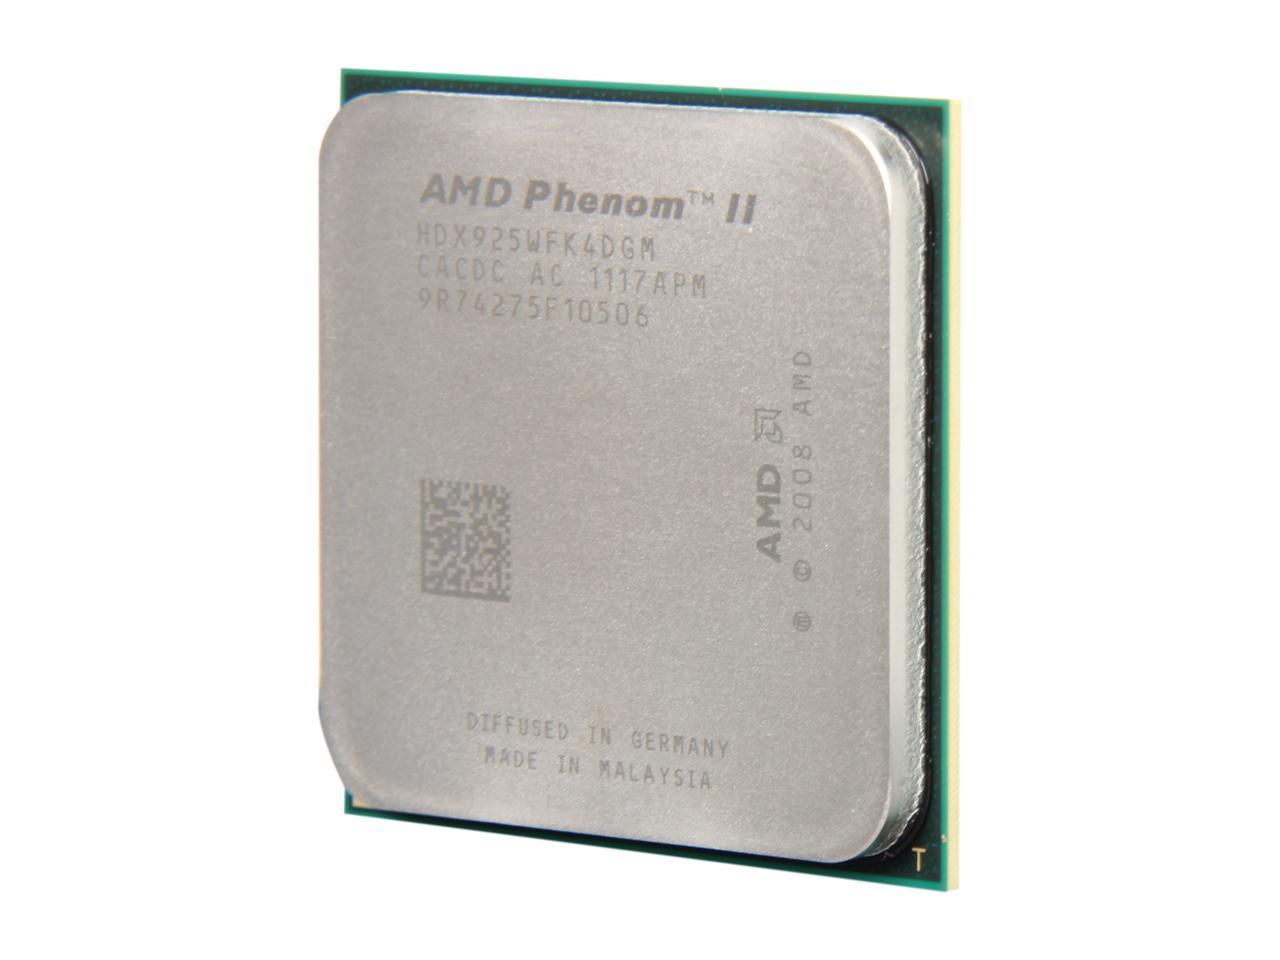 AMD Phenom II X4 925 Deneb Quad-Core 2.8 GHz Socket AM3 95W HDX925WFK4DGM Desktop Processor